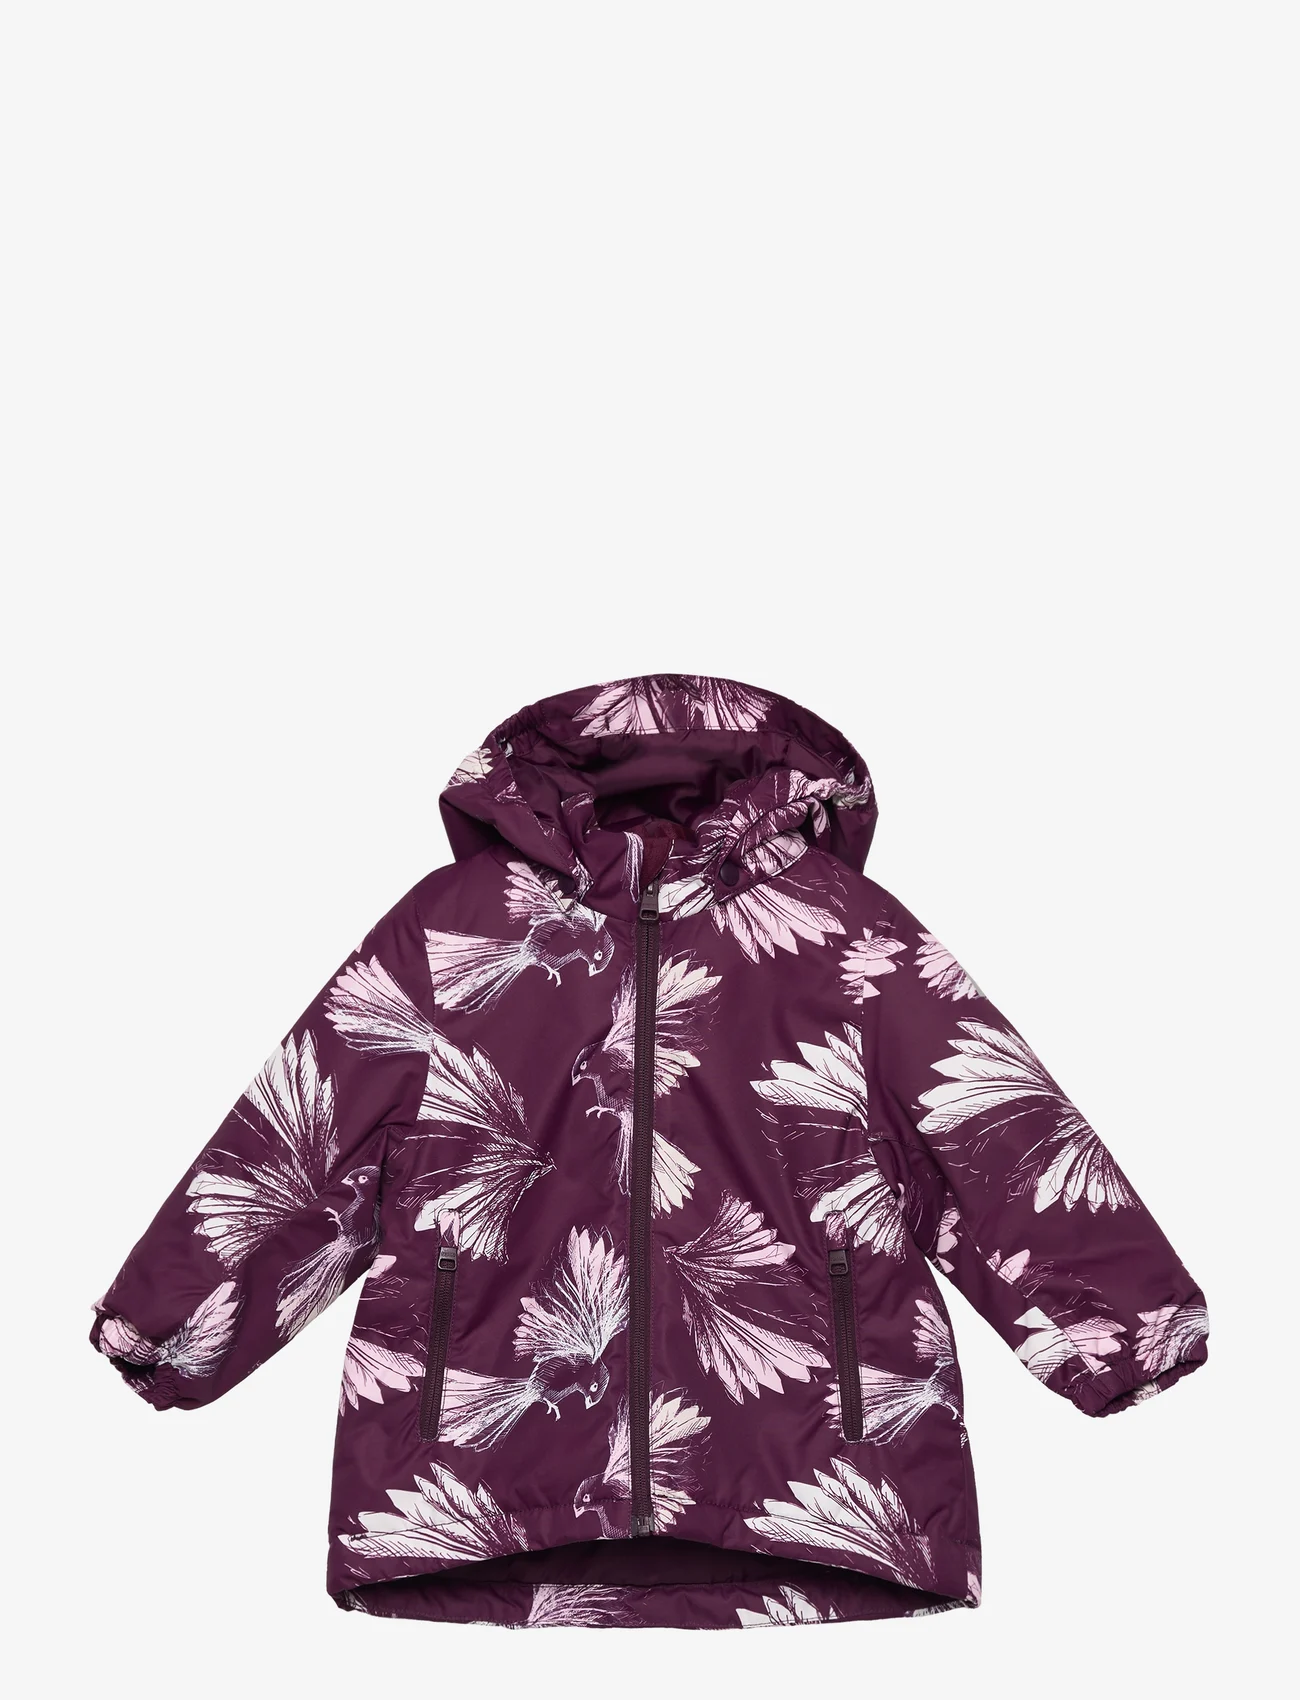 Reima - Winter jacket, Nuotio - vinterjakker - deep purple - 0